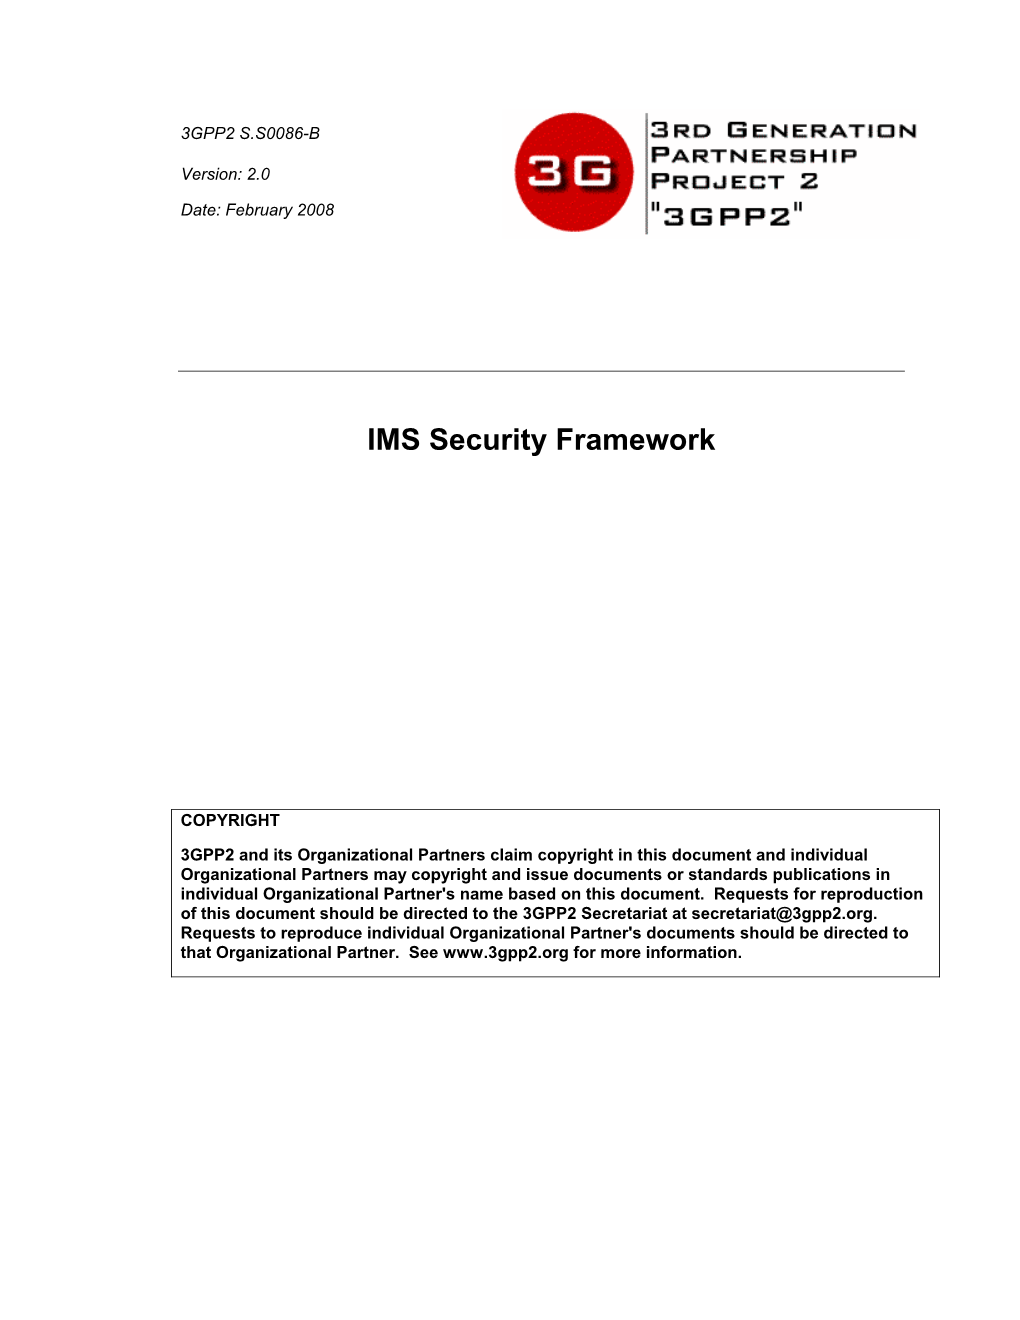 IMS Security Framework